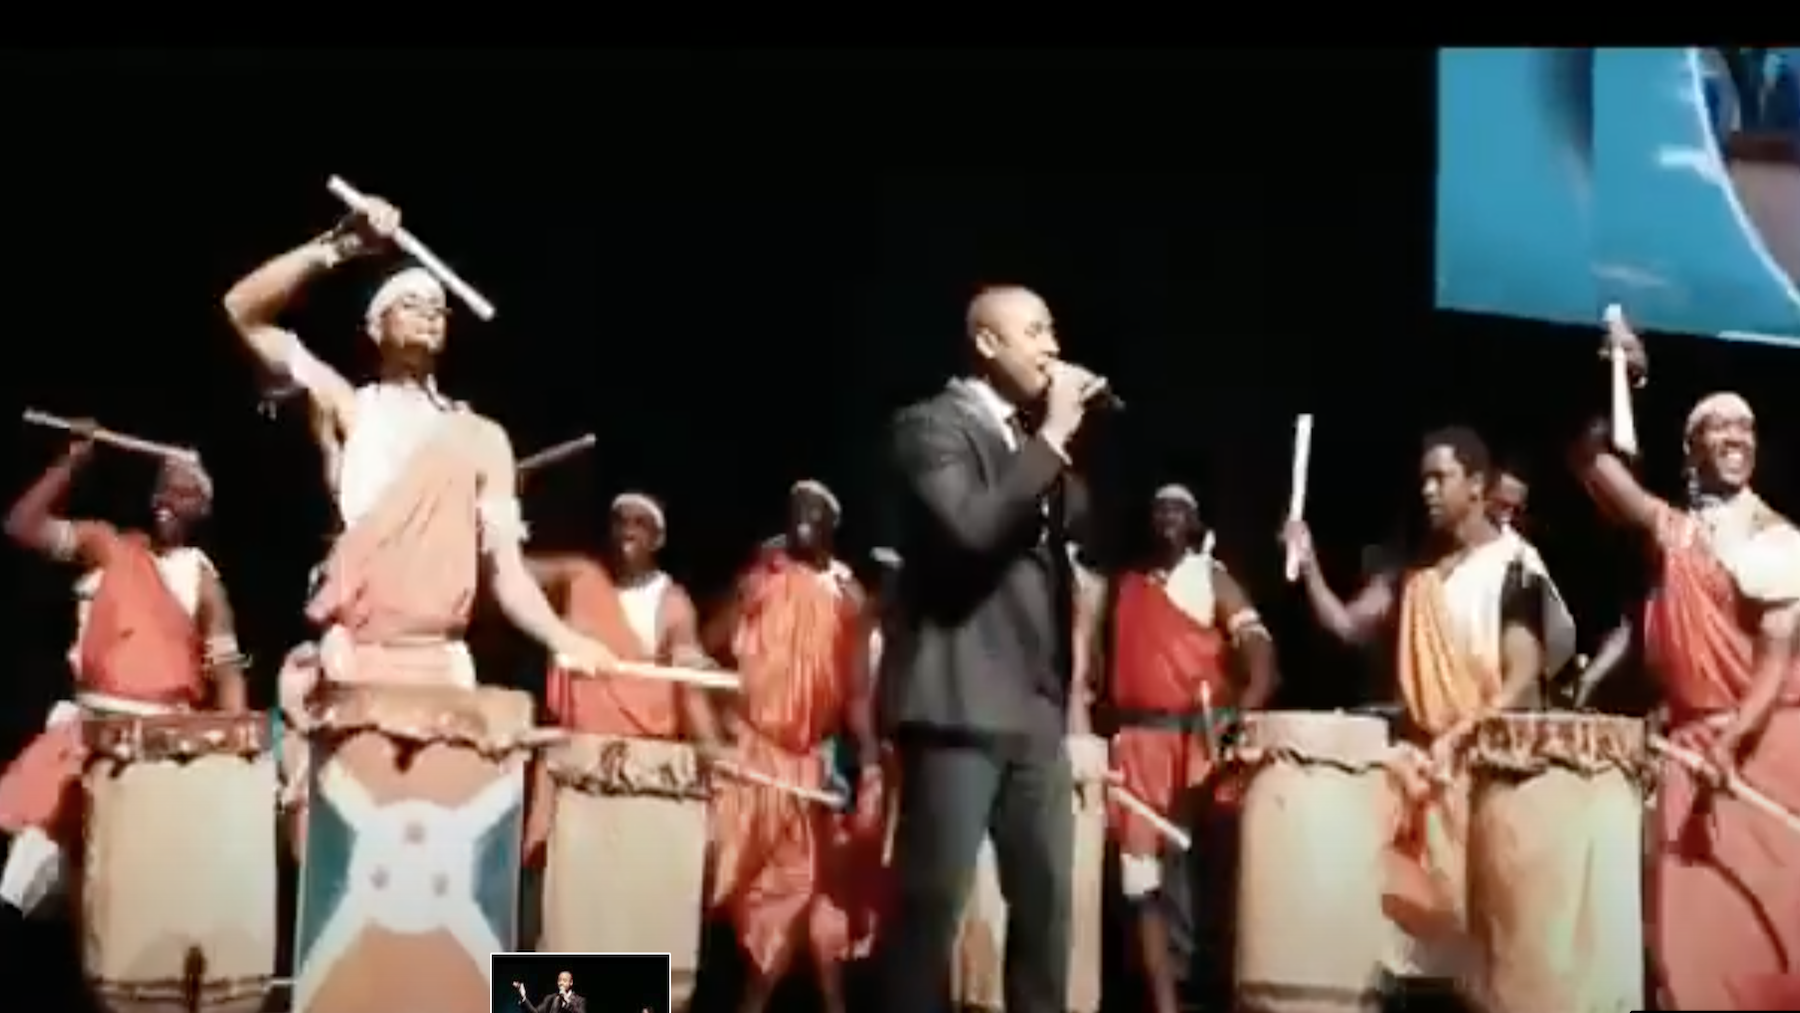 afrique nouvelle musique africa new music toronto canada art arts african congo congolese arthur tongo thomas tumbu festival bana y'afrique abel maxwell togo